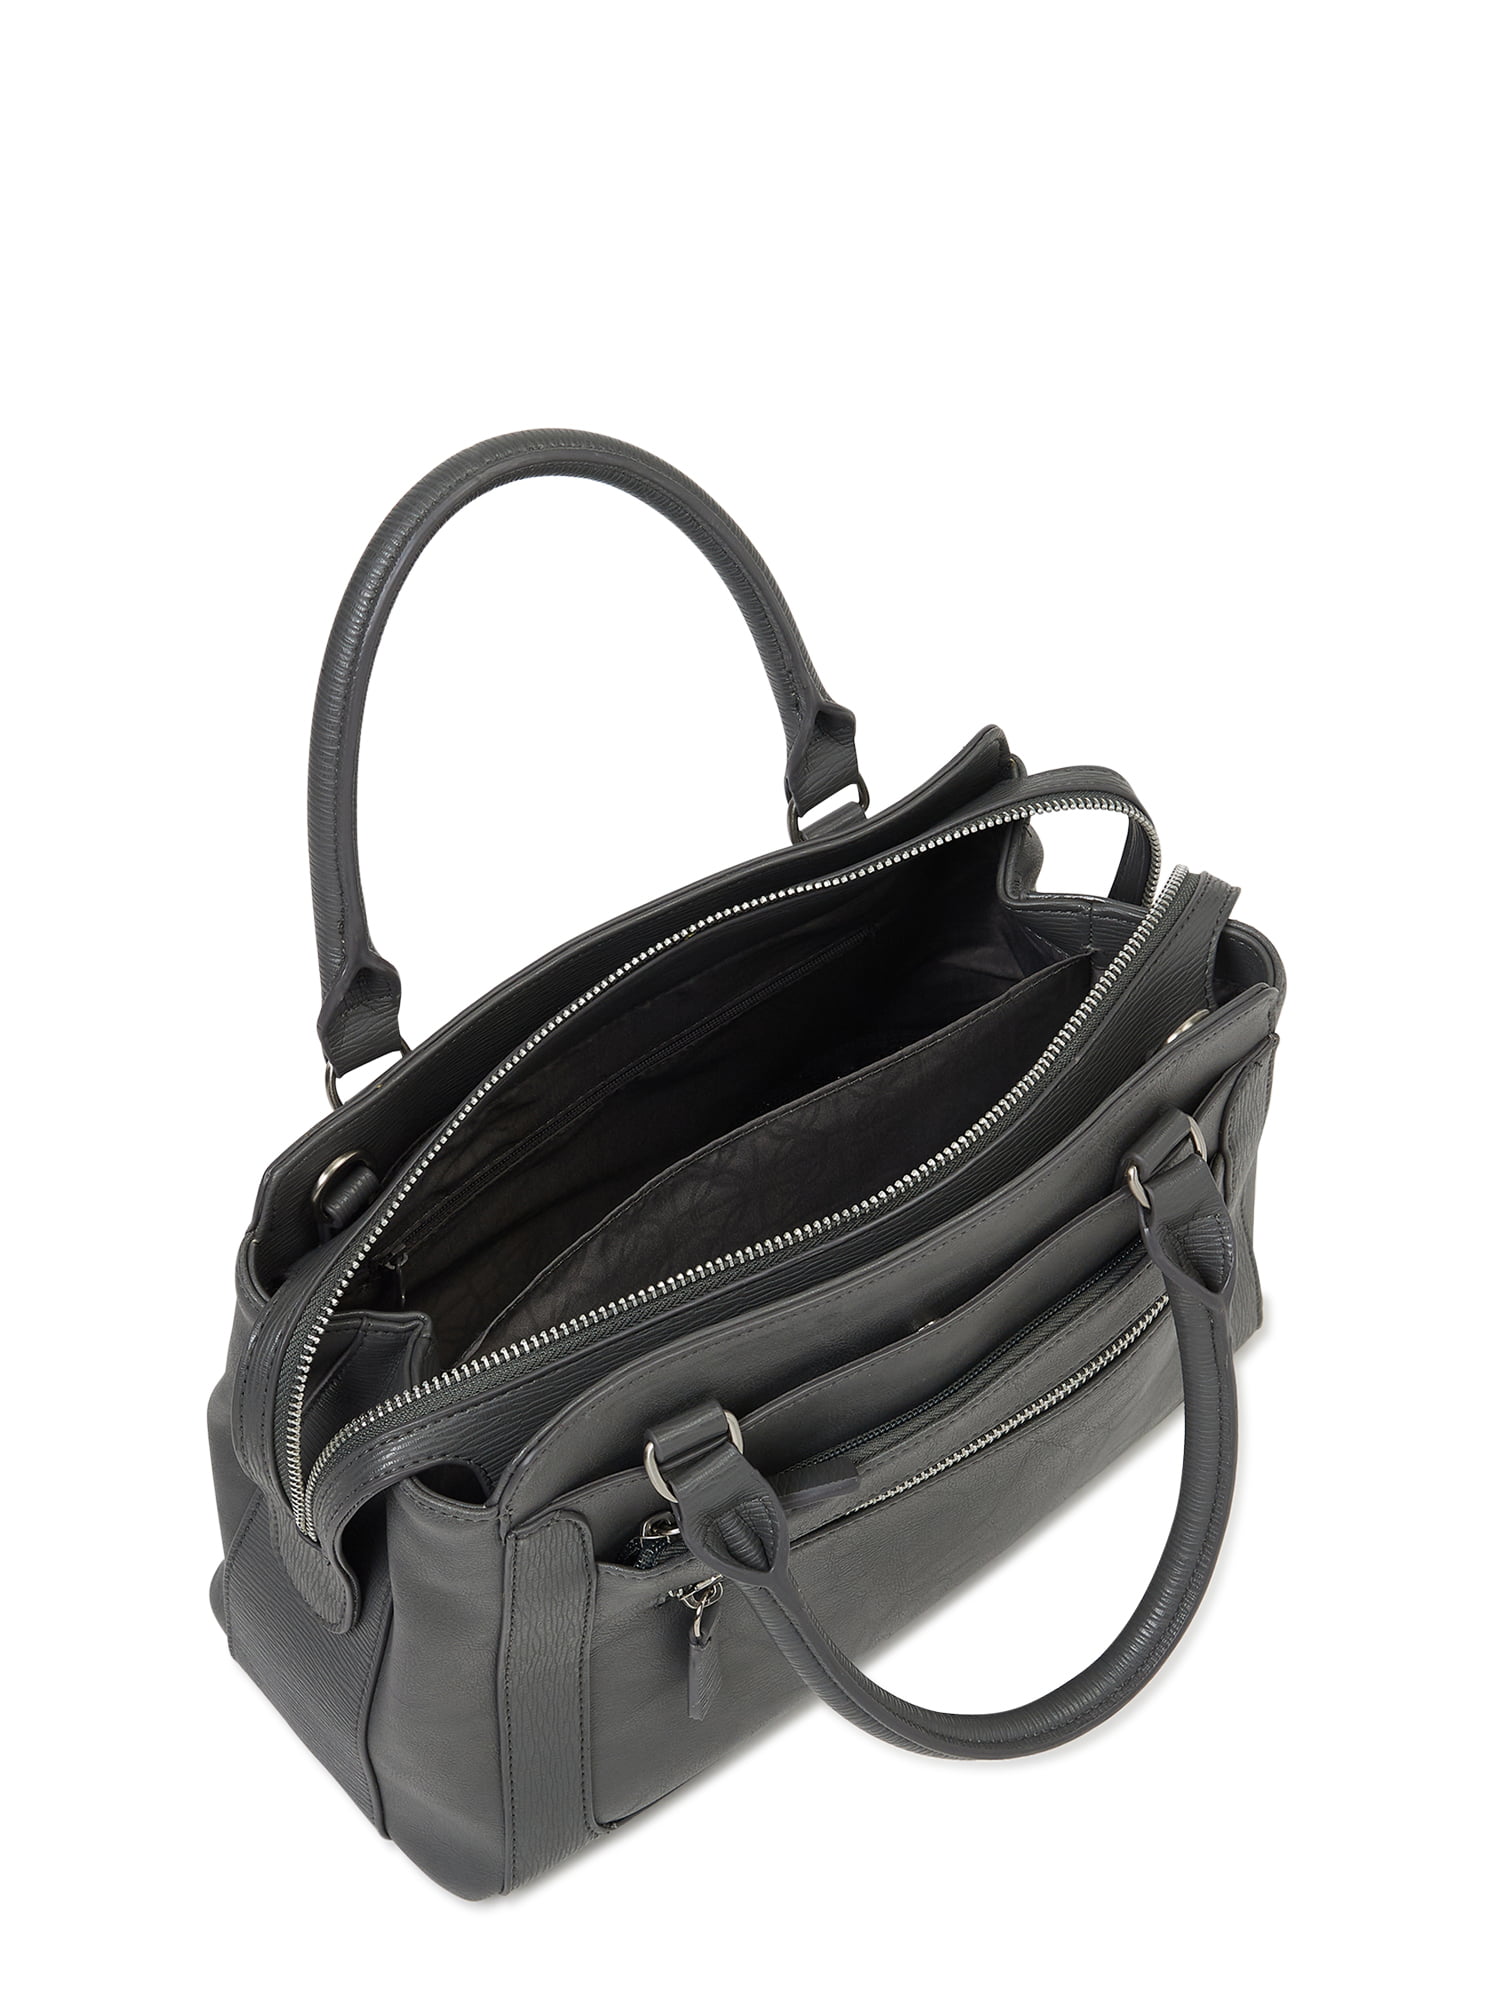 Grey Buckle Detail Satchel Handbag With Detachable Strap | LRBRBGE001 |  Cilory.com